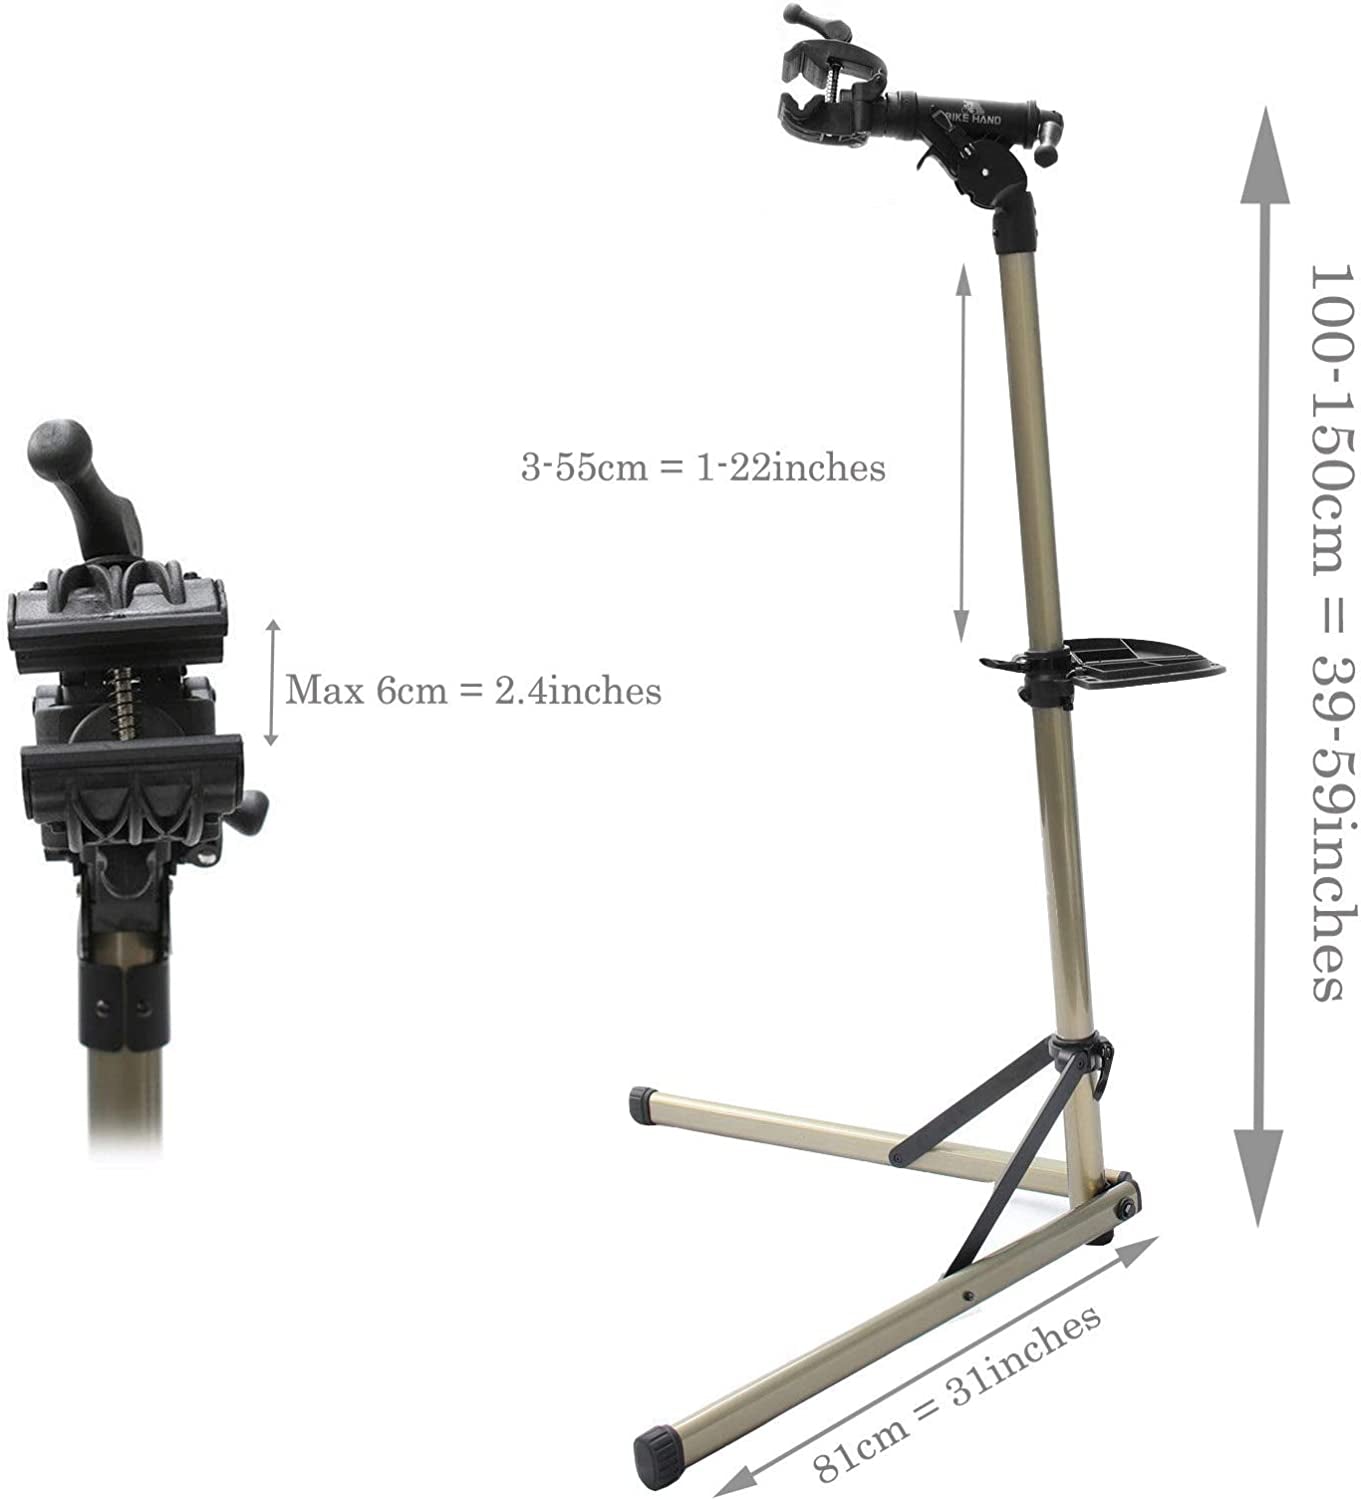 Bikehand Bike Repair Stand (Max 55 Lbs) - Home Portable Bicycle Mechanics Workstand - for Mountain Bikes and Road Bikes Maintenance